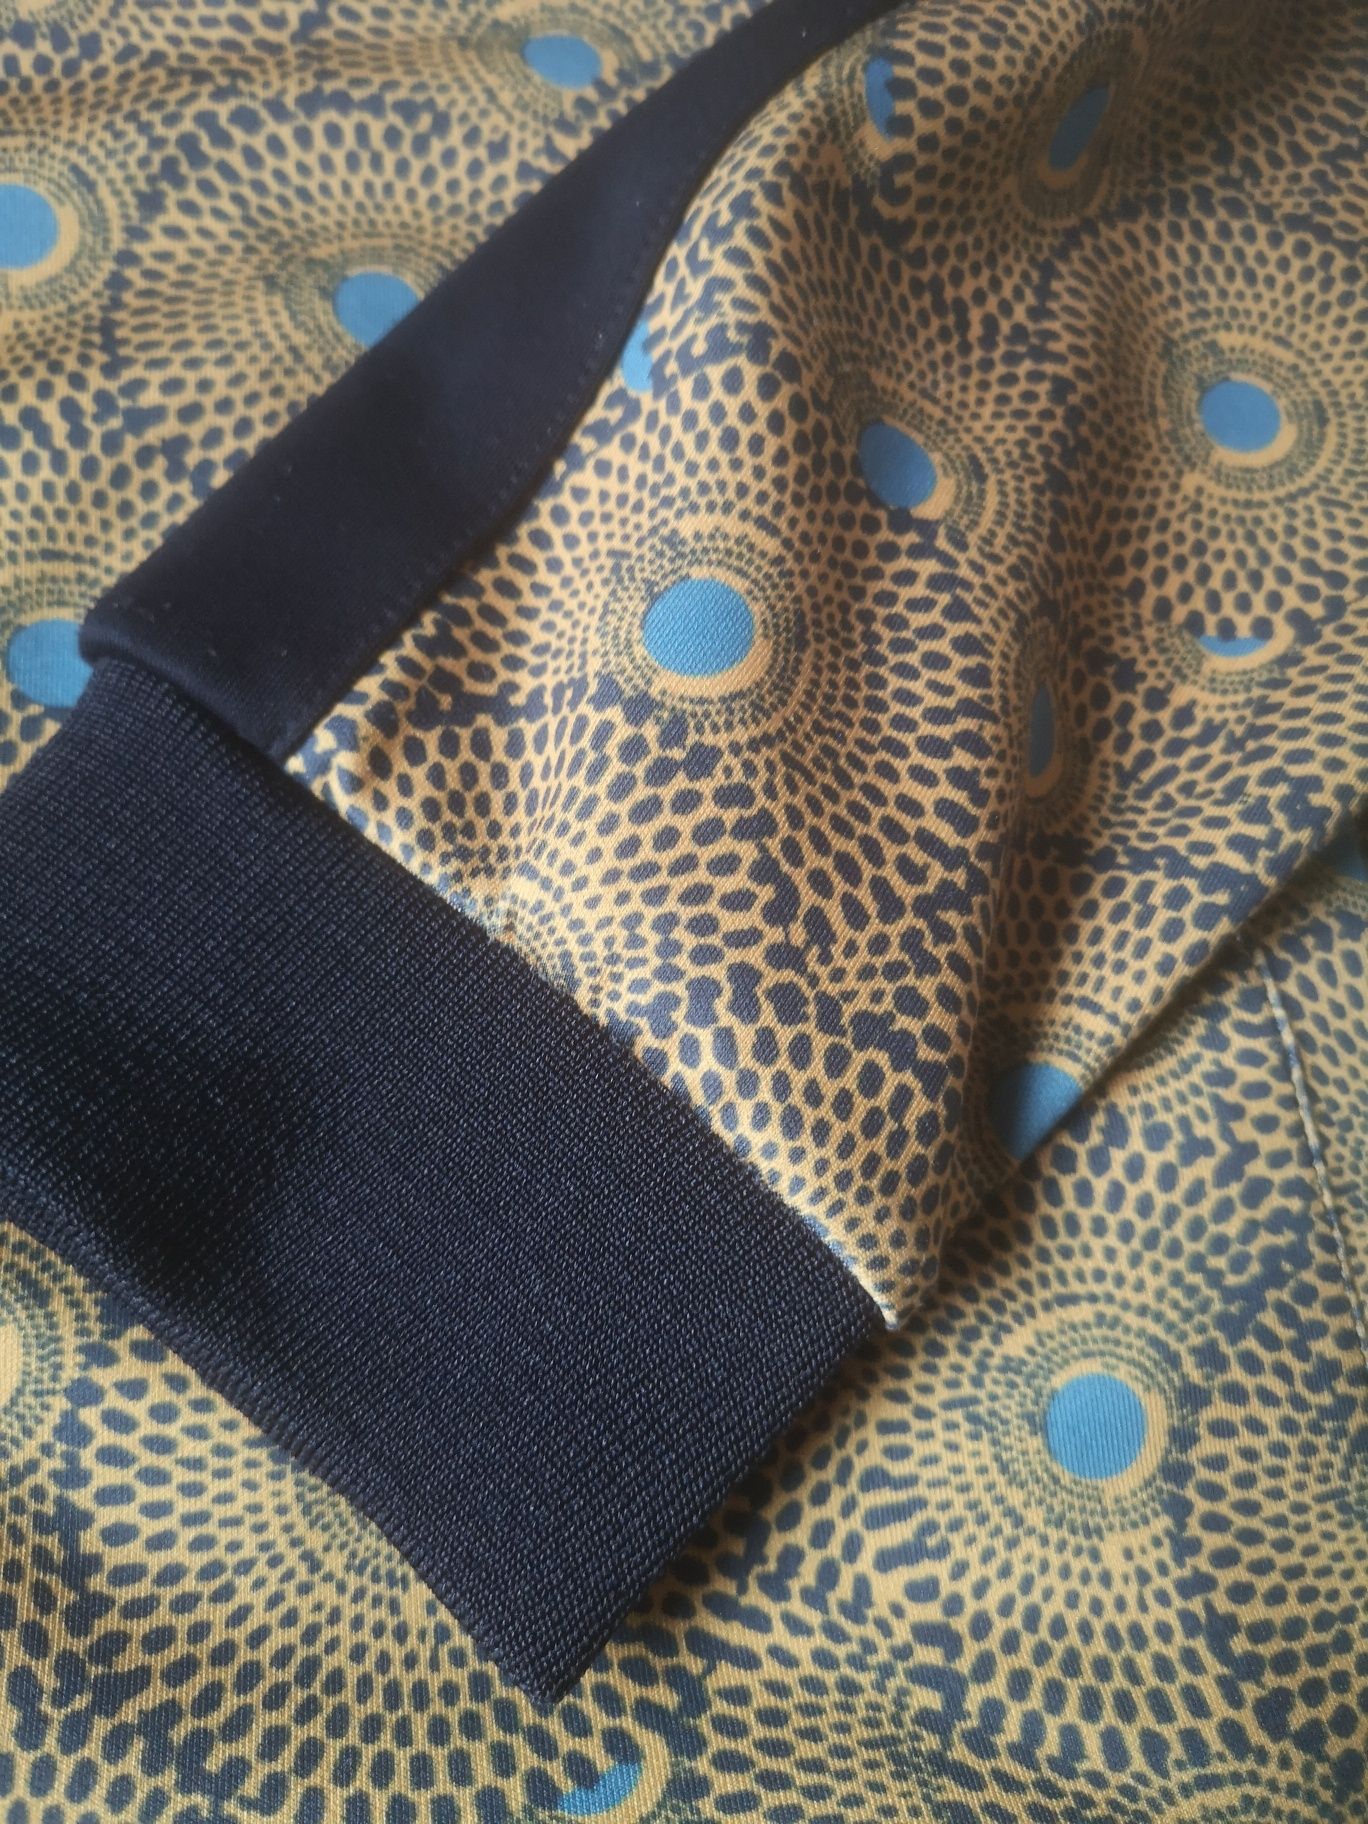 Bluza męska Zara r. XL. Rozpinana